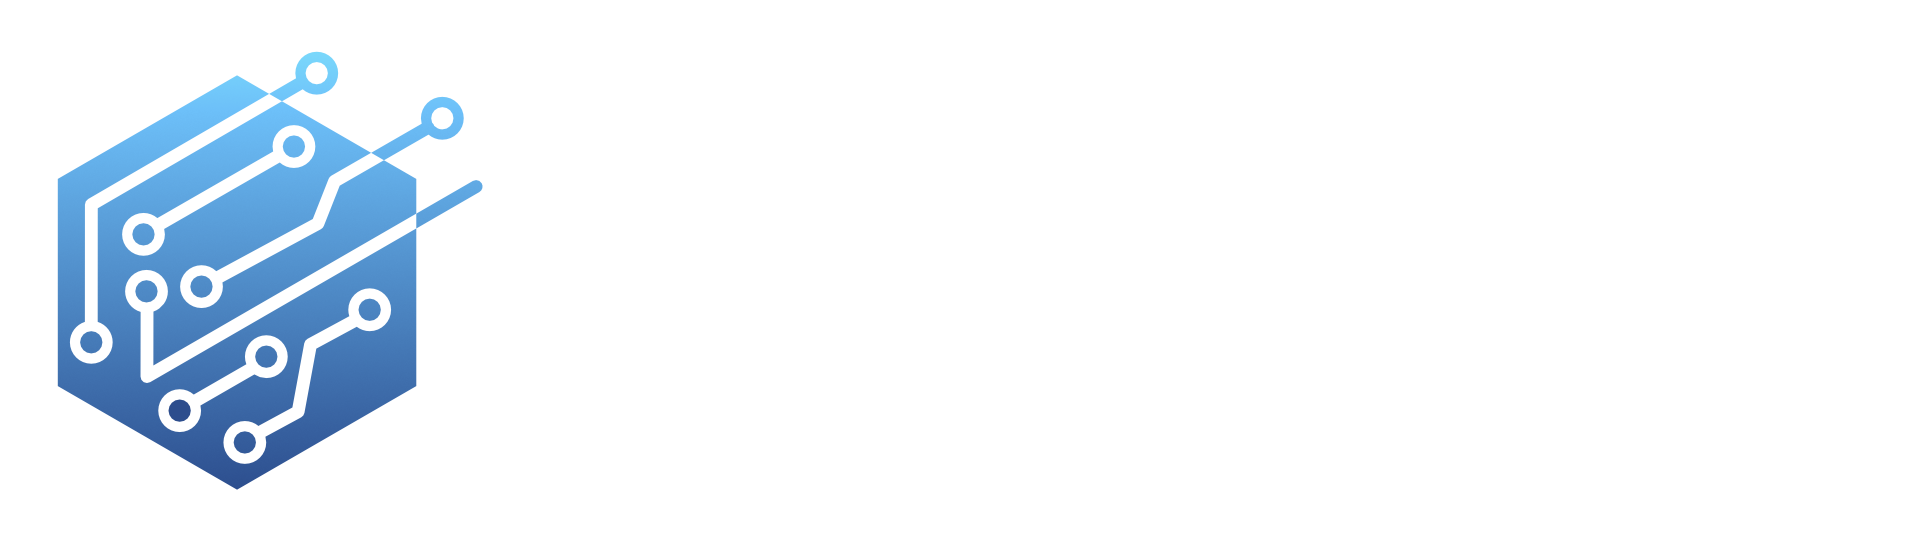 BlockFo Kop logo